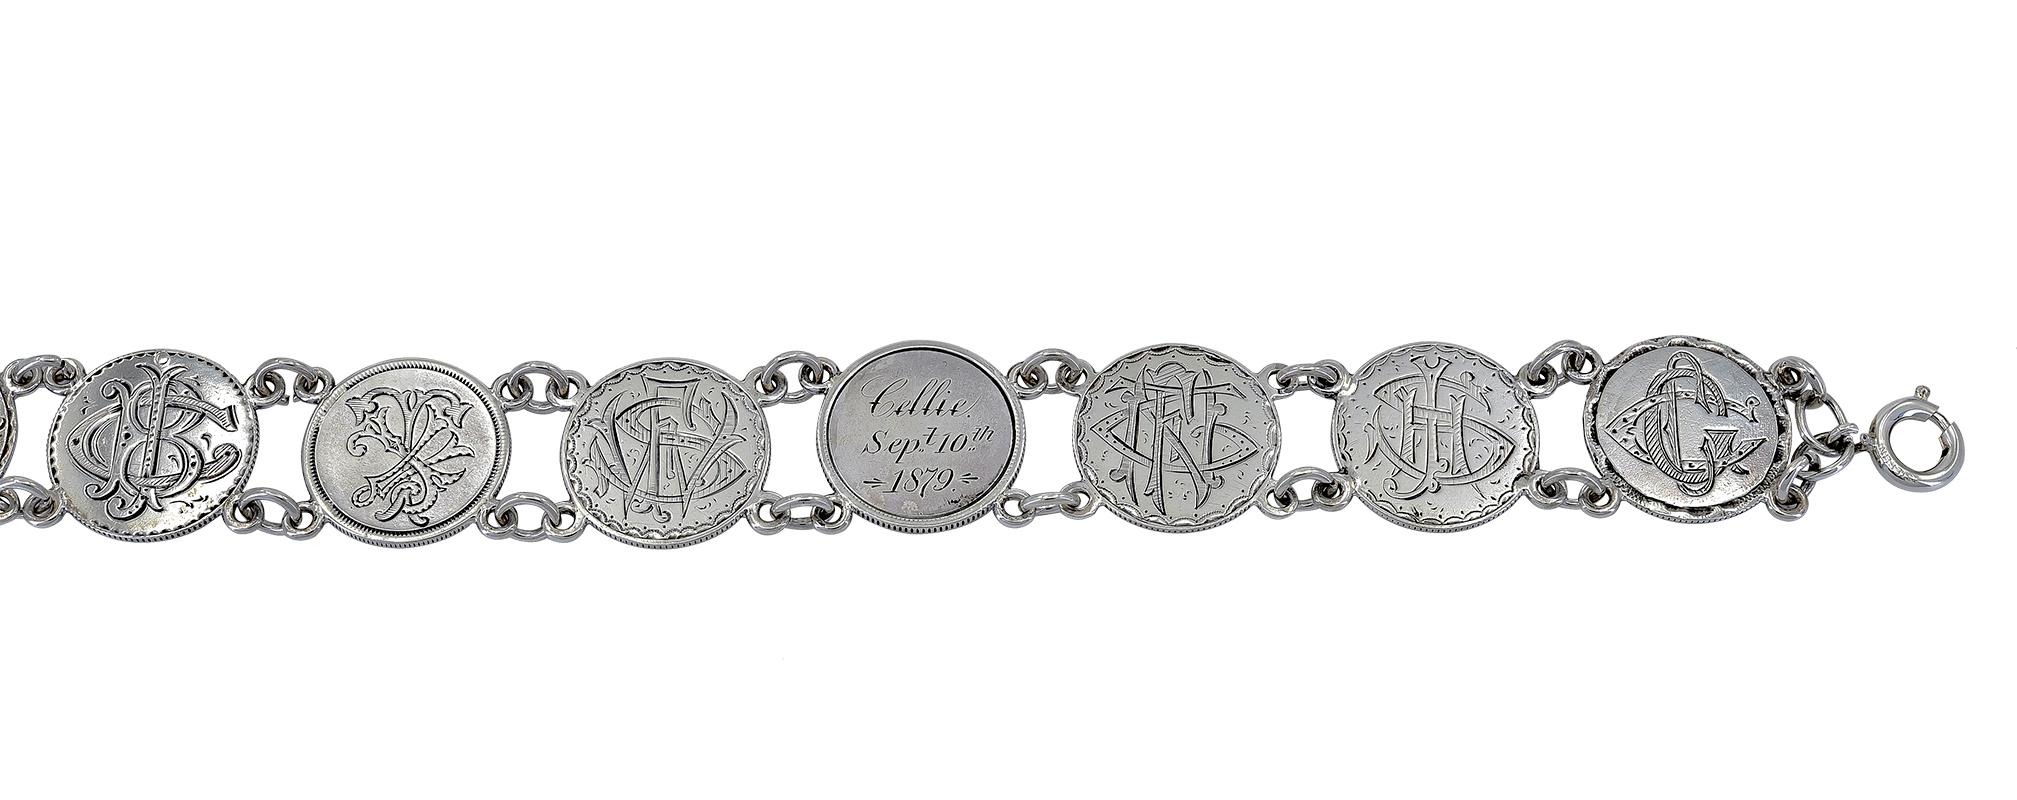 silver coin bracelet